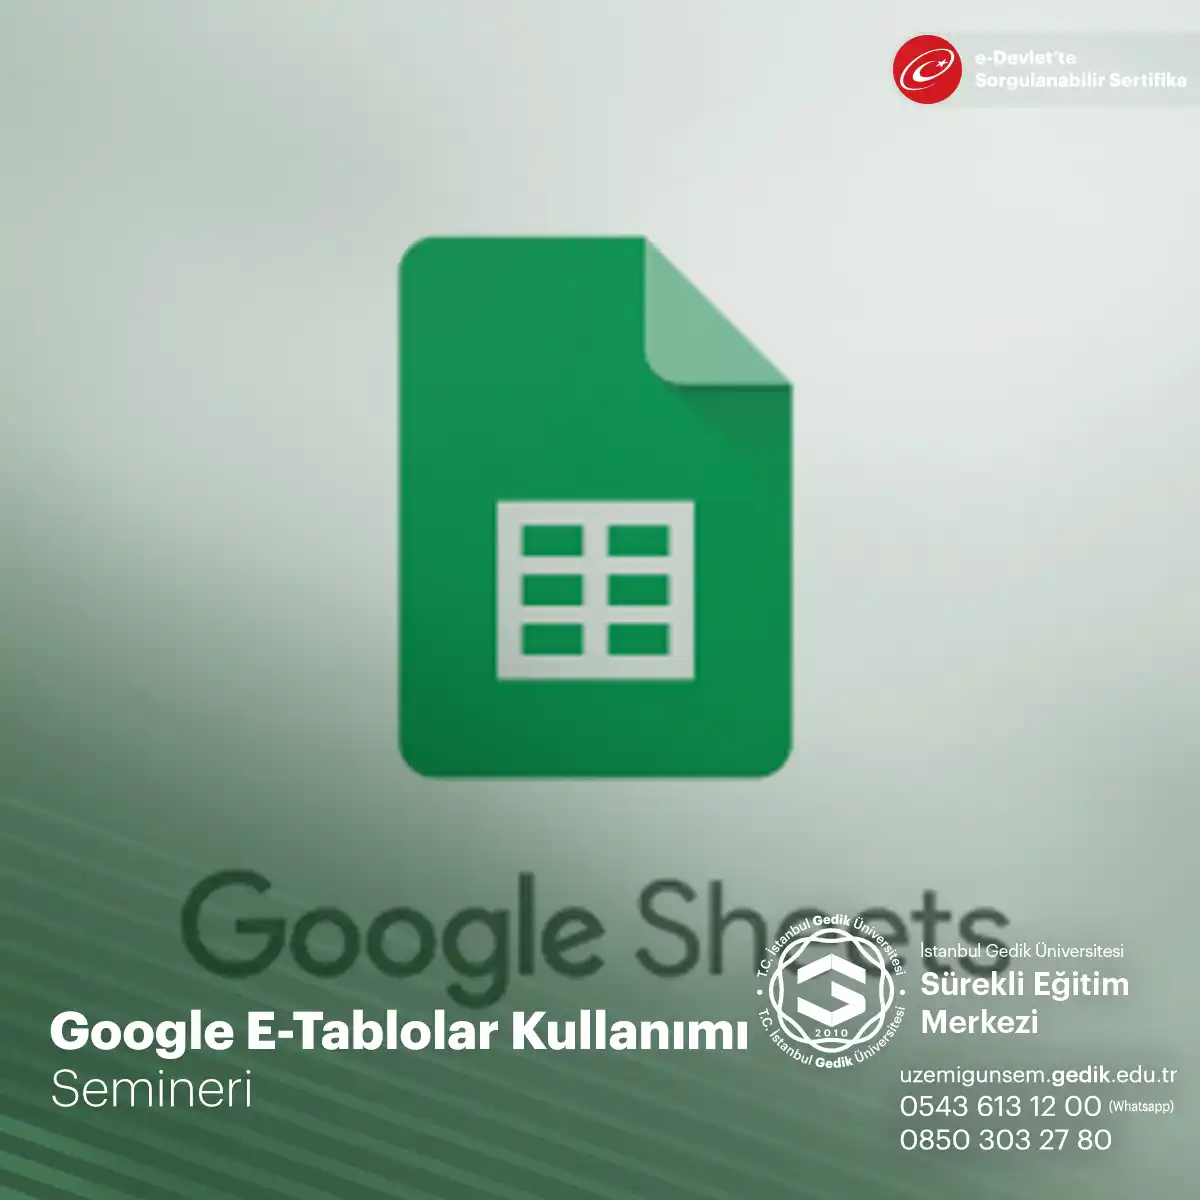 Google Sheets (E-Tablolar)